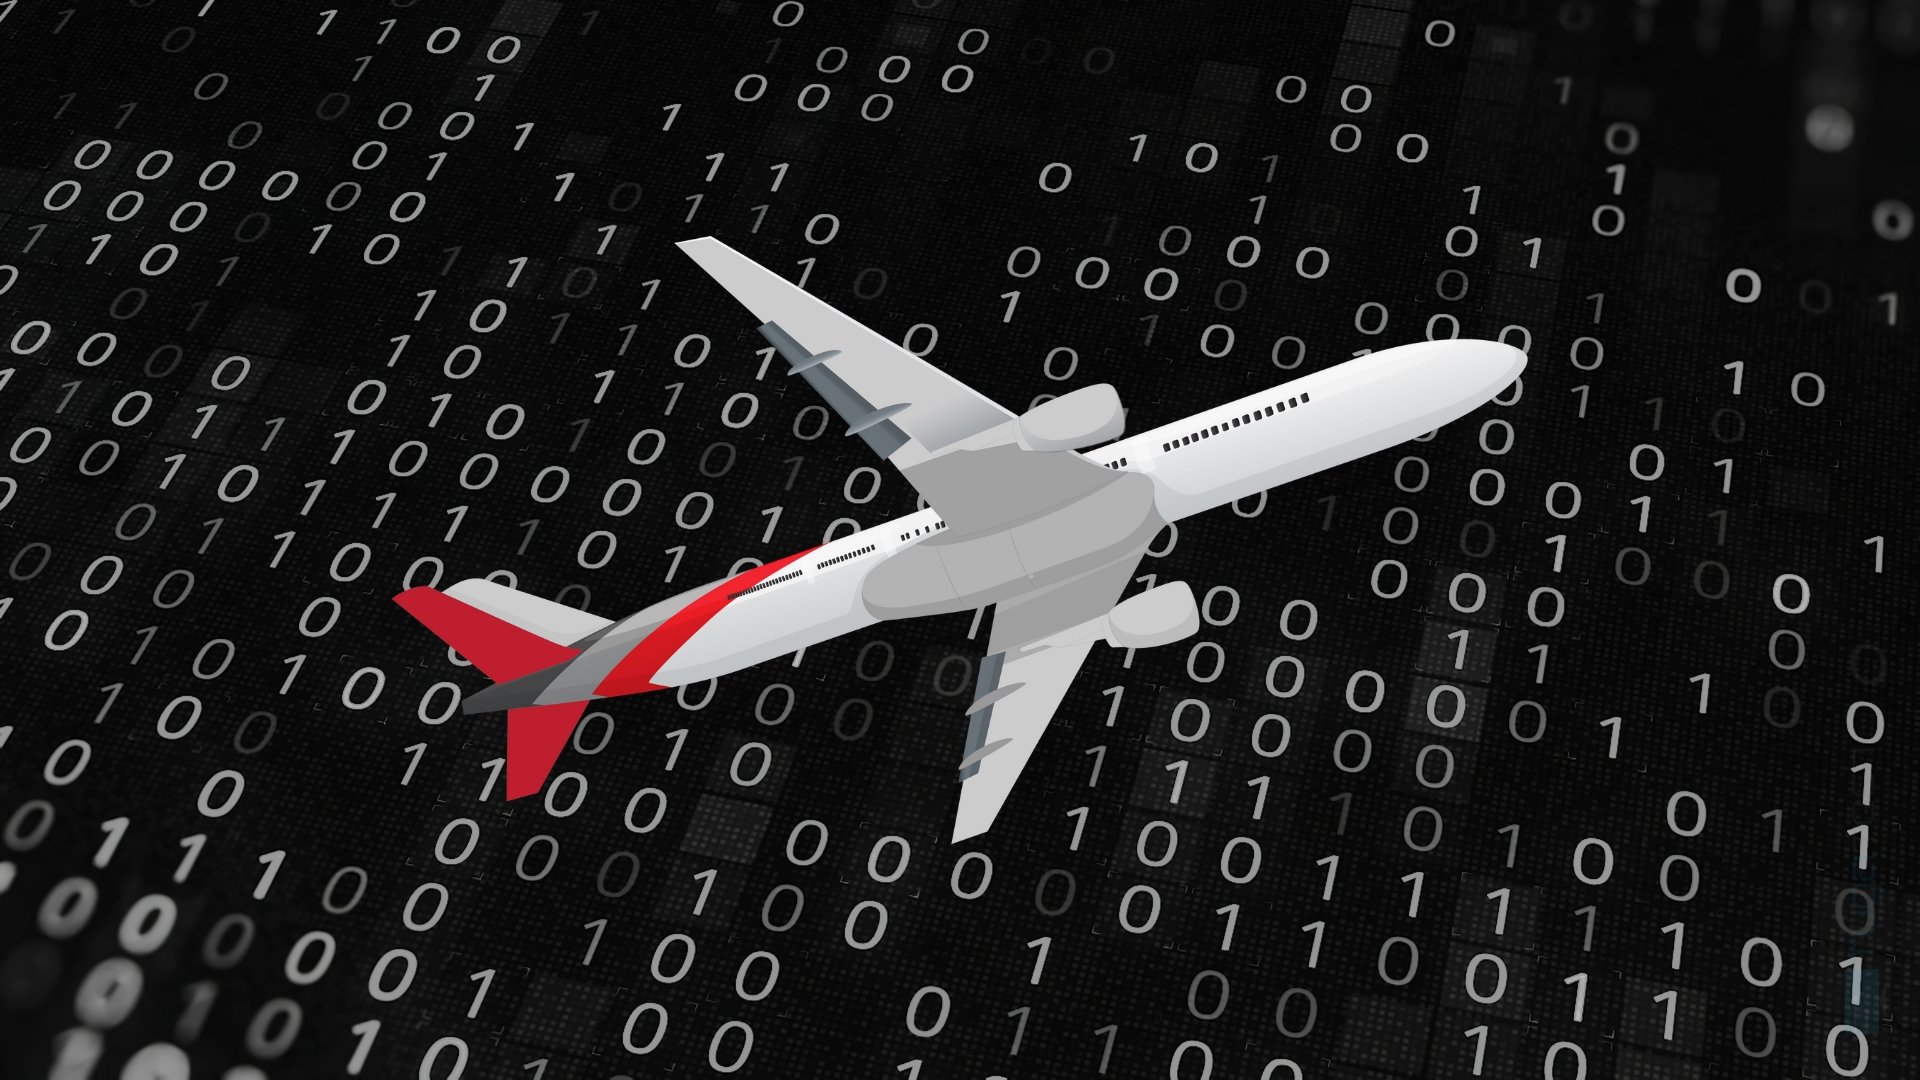 Grupo de ransomware divulga dados sensíveis da Boeing